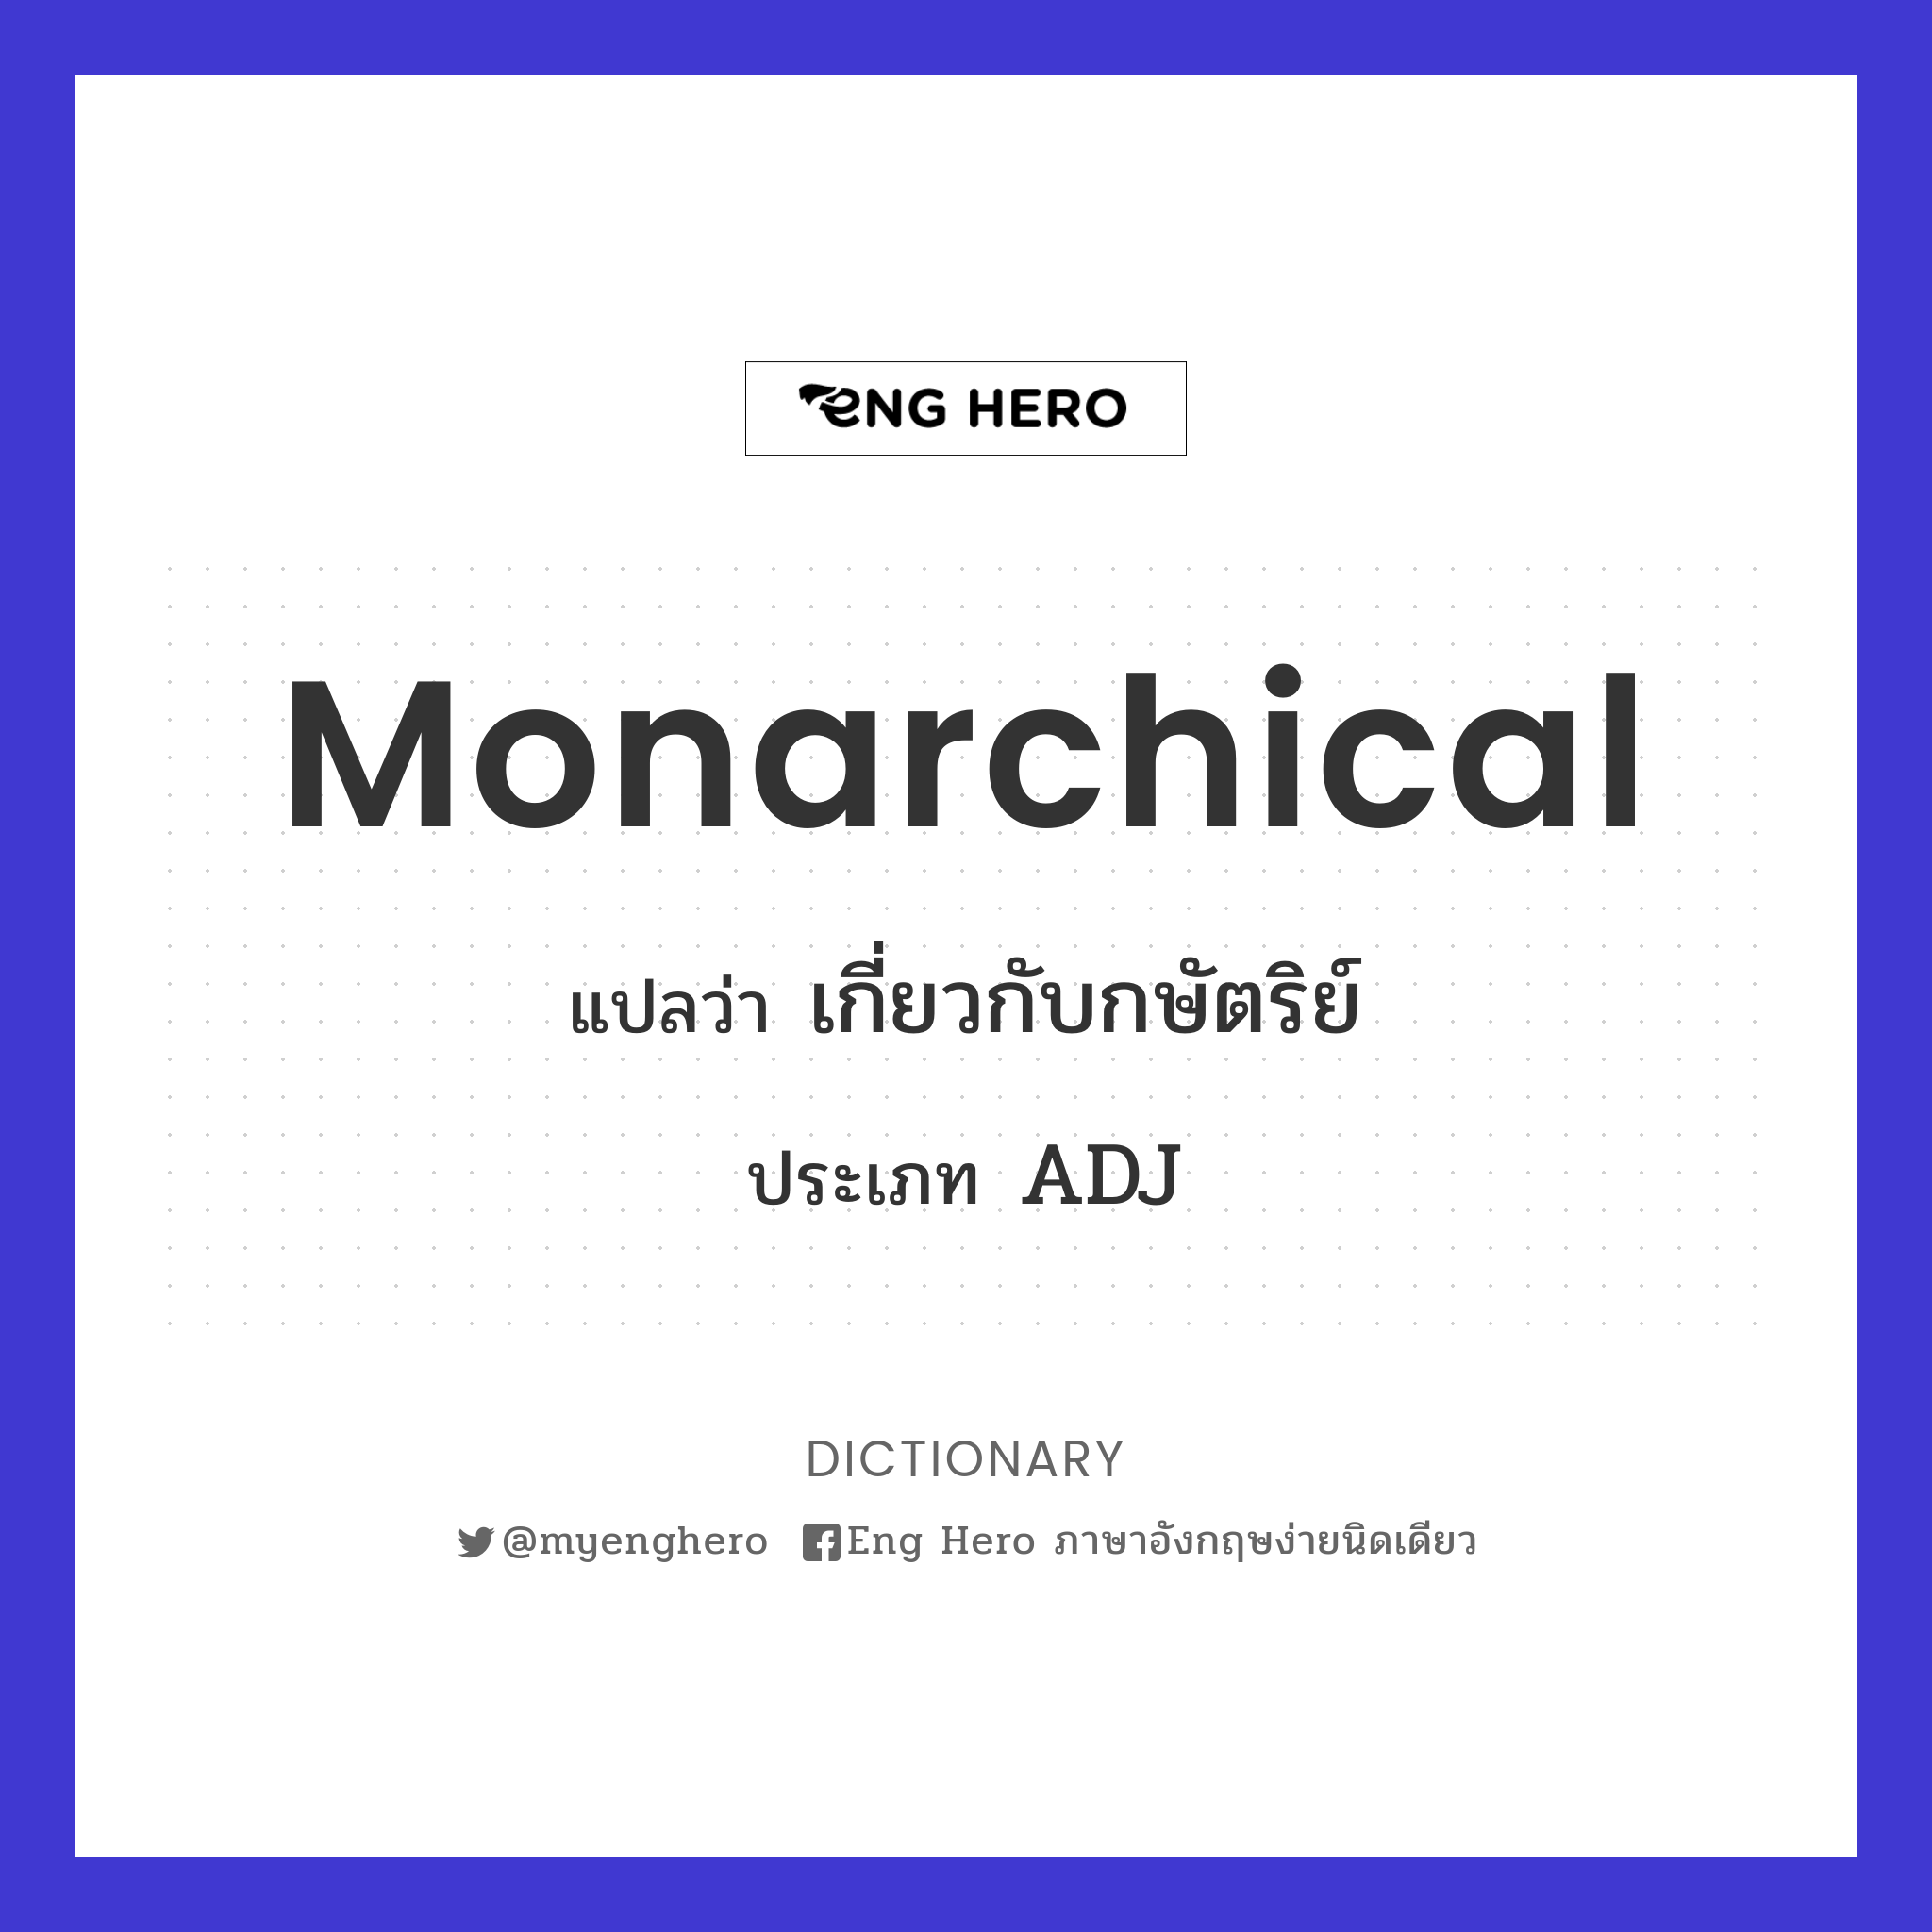 monarchical